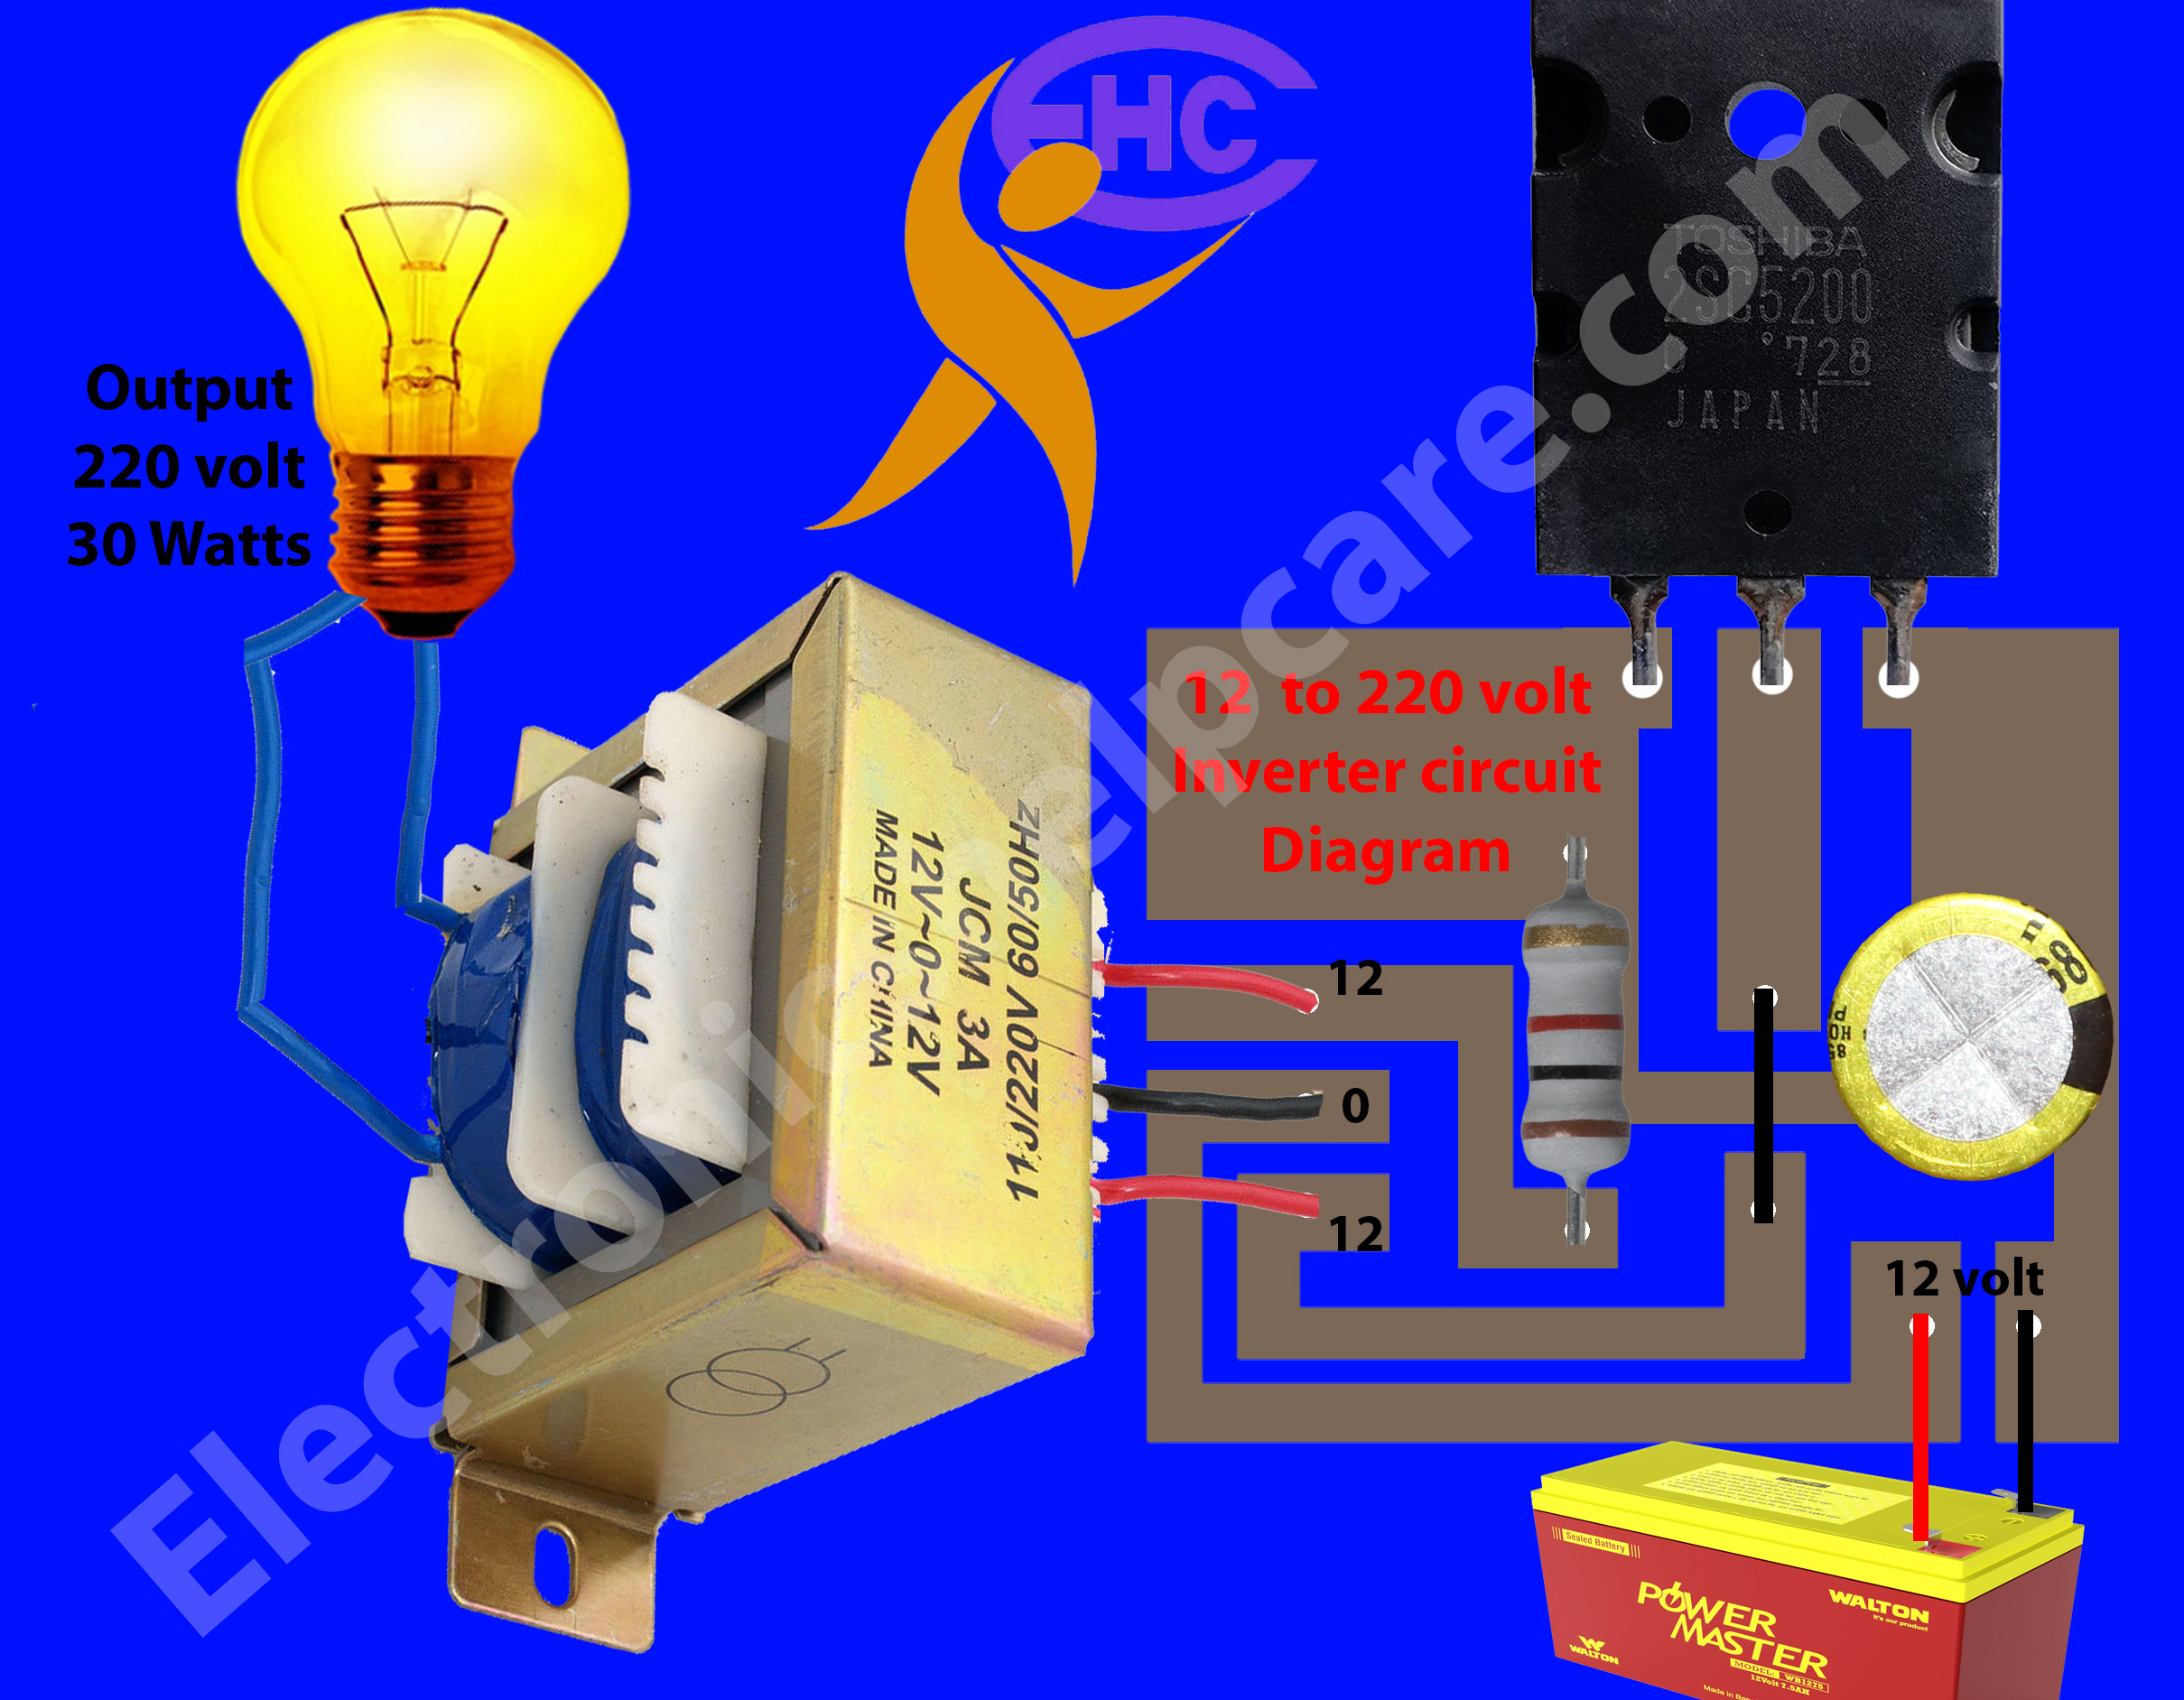 How to make inverter circuit diagram easy